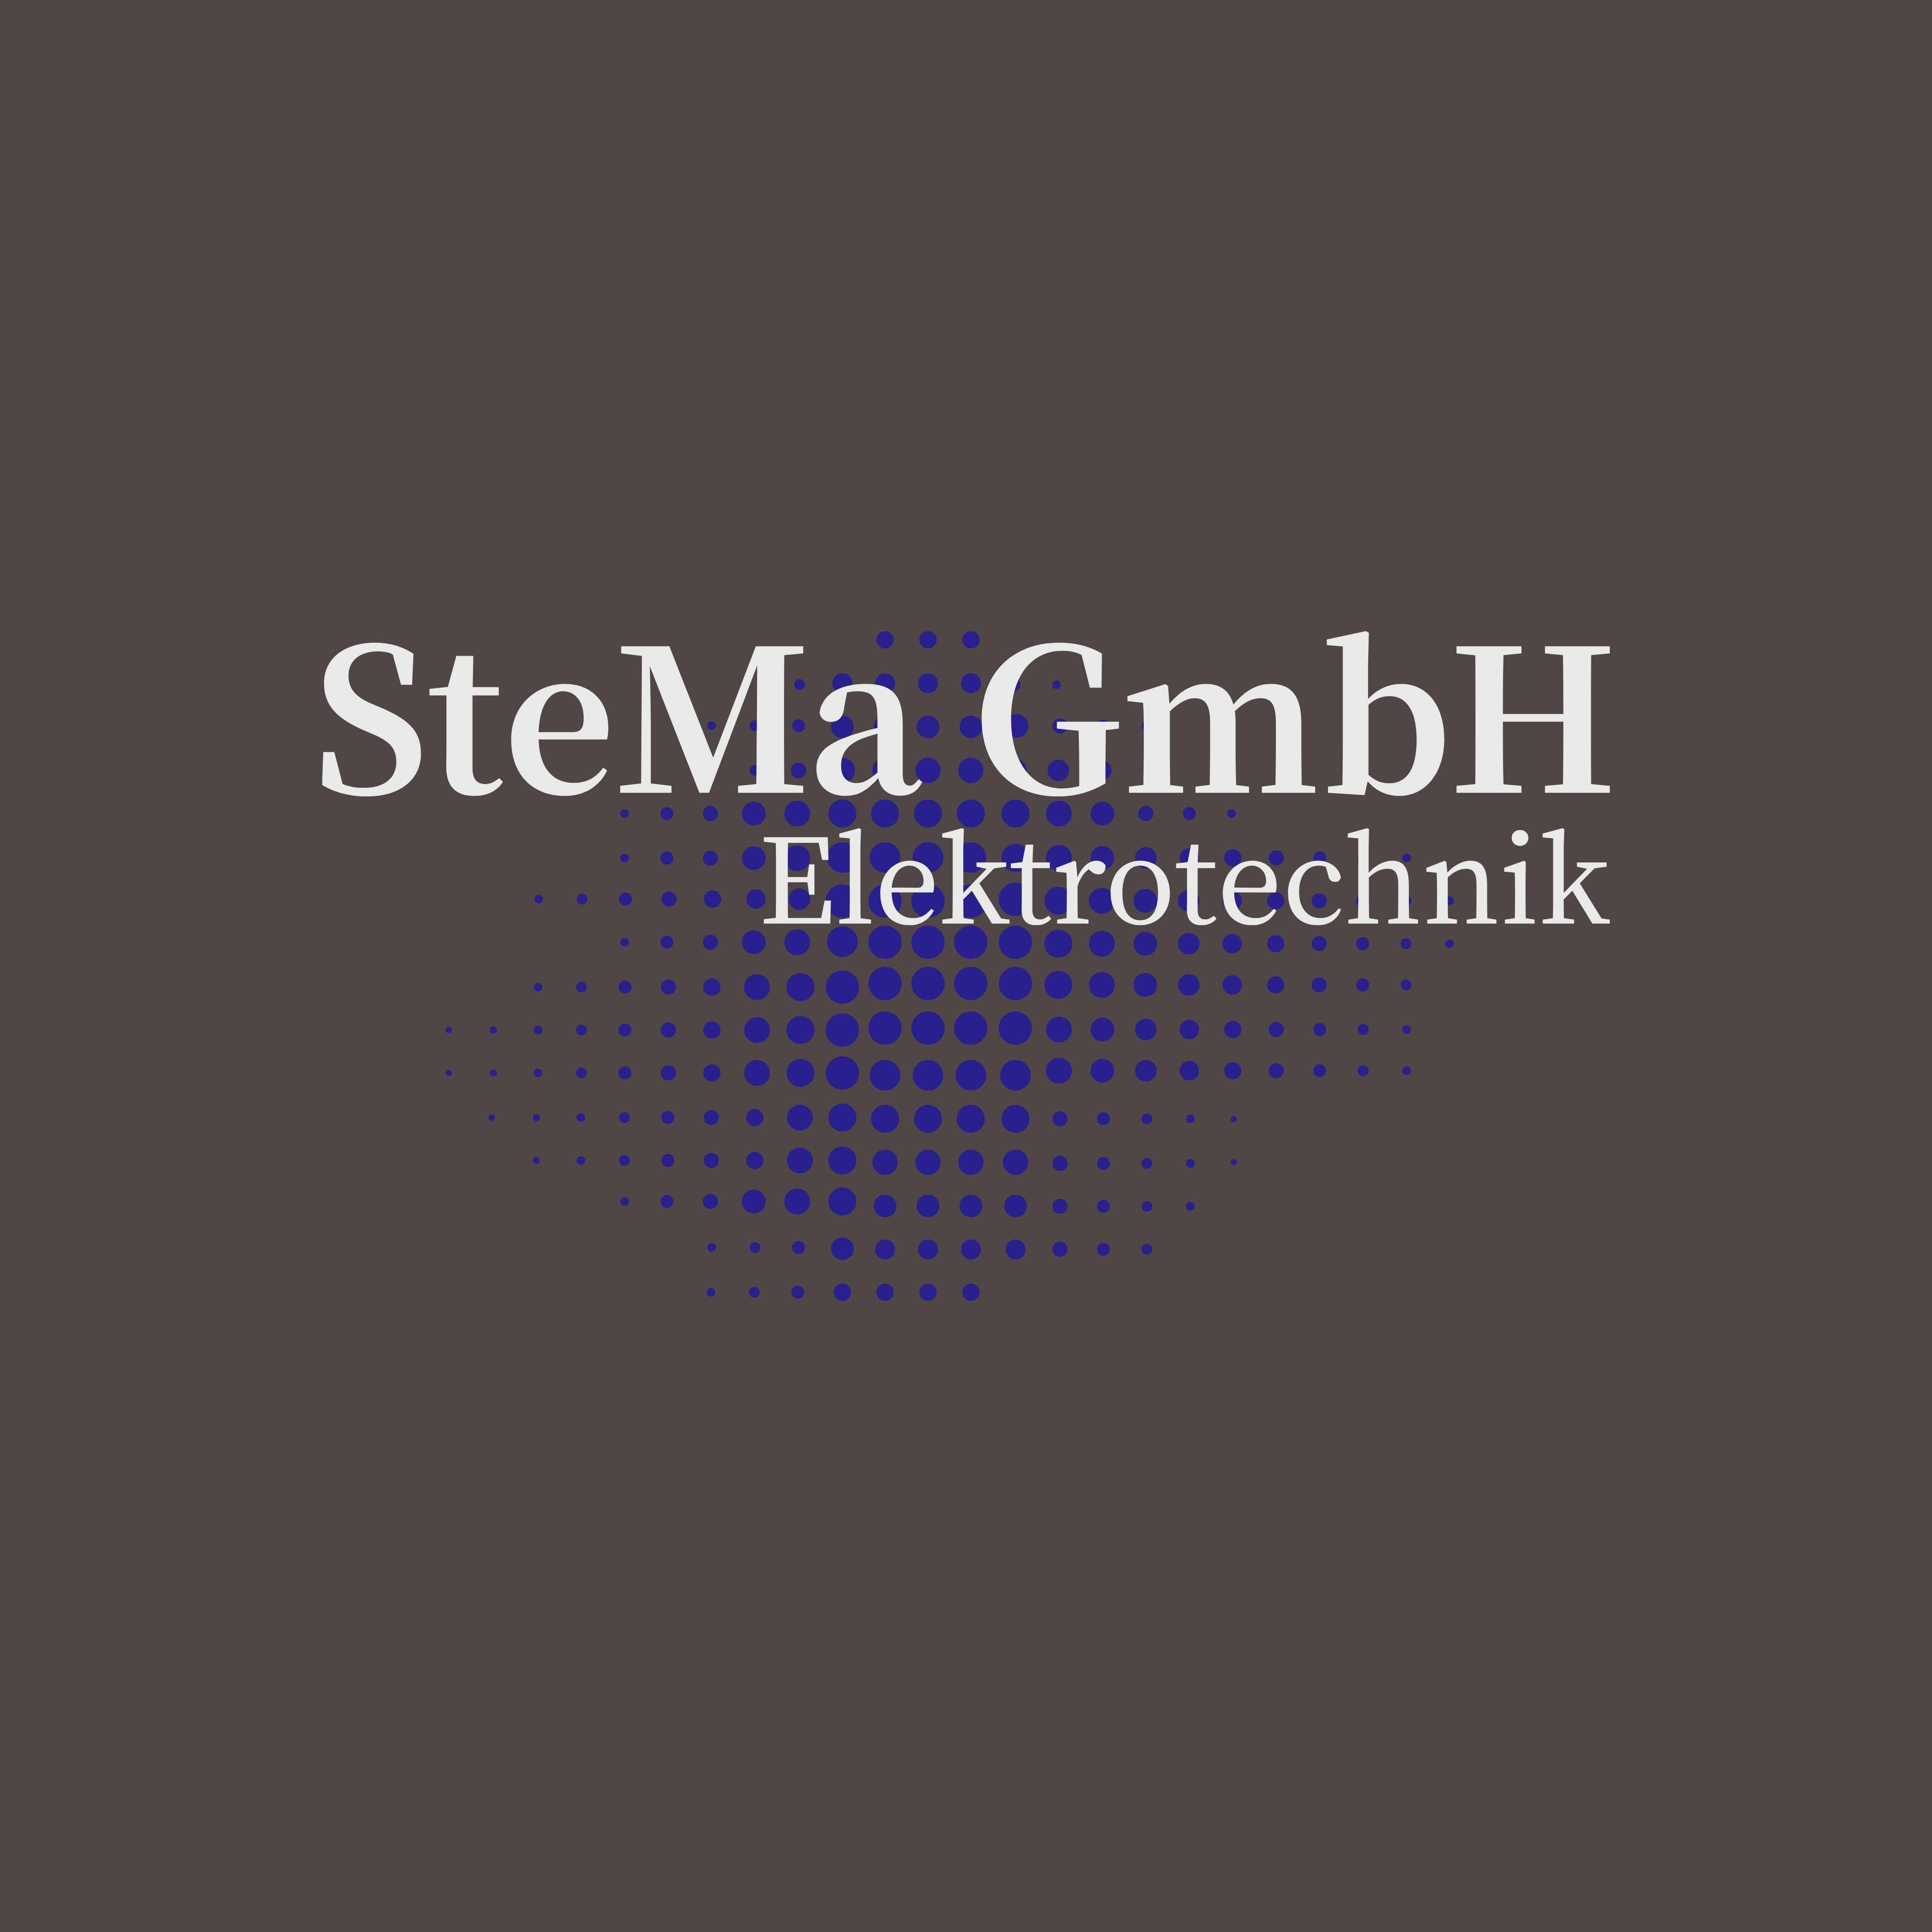 SteMa GmbH Elektrotechnik  